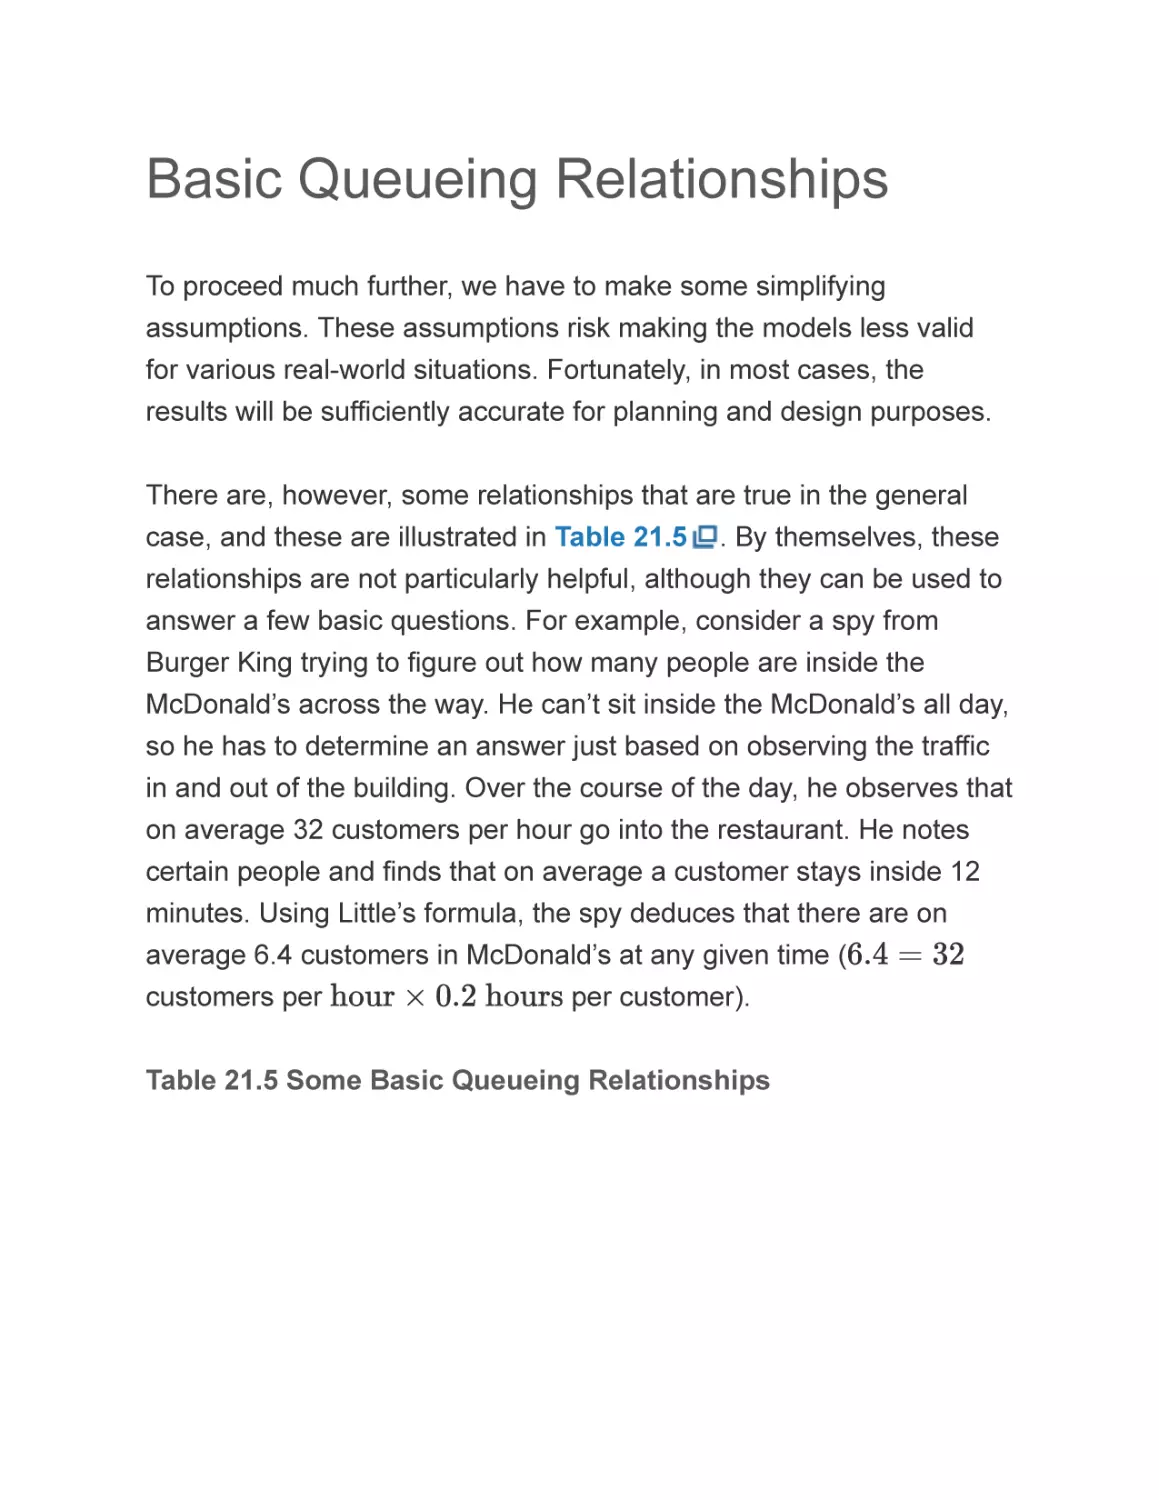 Basic Queueing Relationships